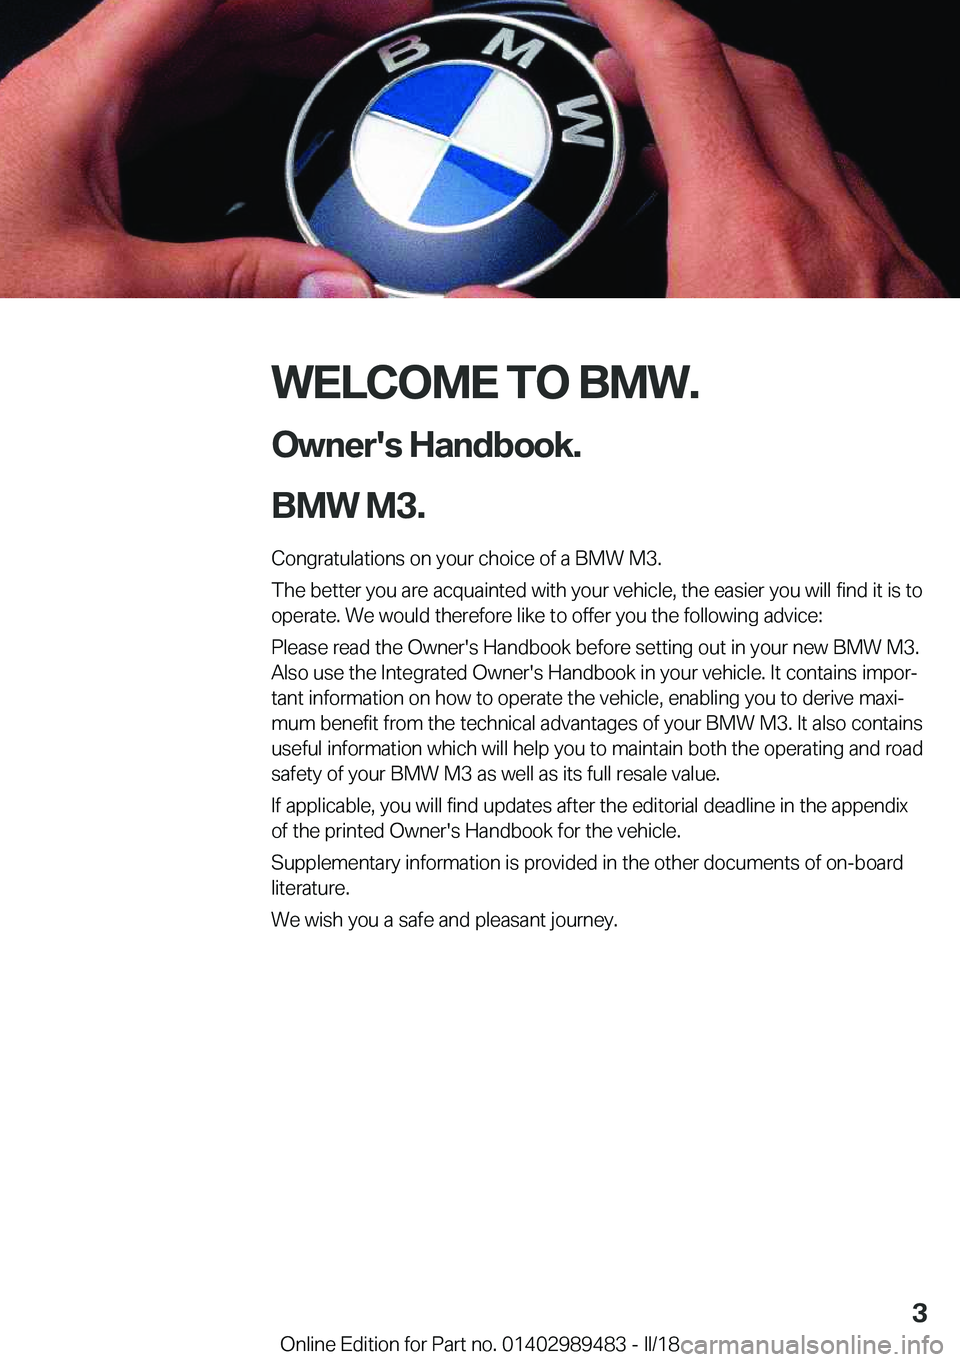 BMW M3 2018  Owners Manual �W�E�L�C�O�M�E��T�O��B�M�W�.�O�w�n�e�r�'�s��H�a�n�d�b�o�o�k�.
�B�M�W��M�3�.
�C�o�n�g�r�a�t�u�l�a�t�i�o�n�s��o�n��y�o�u�r��c�h�o�i�c�e��o�f��a��B�M�W��M�3�.
�T�h�e��b�e�t�t�e�r��y�o�u�